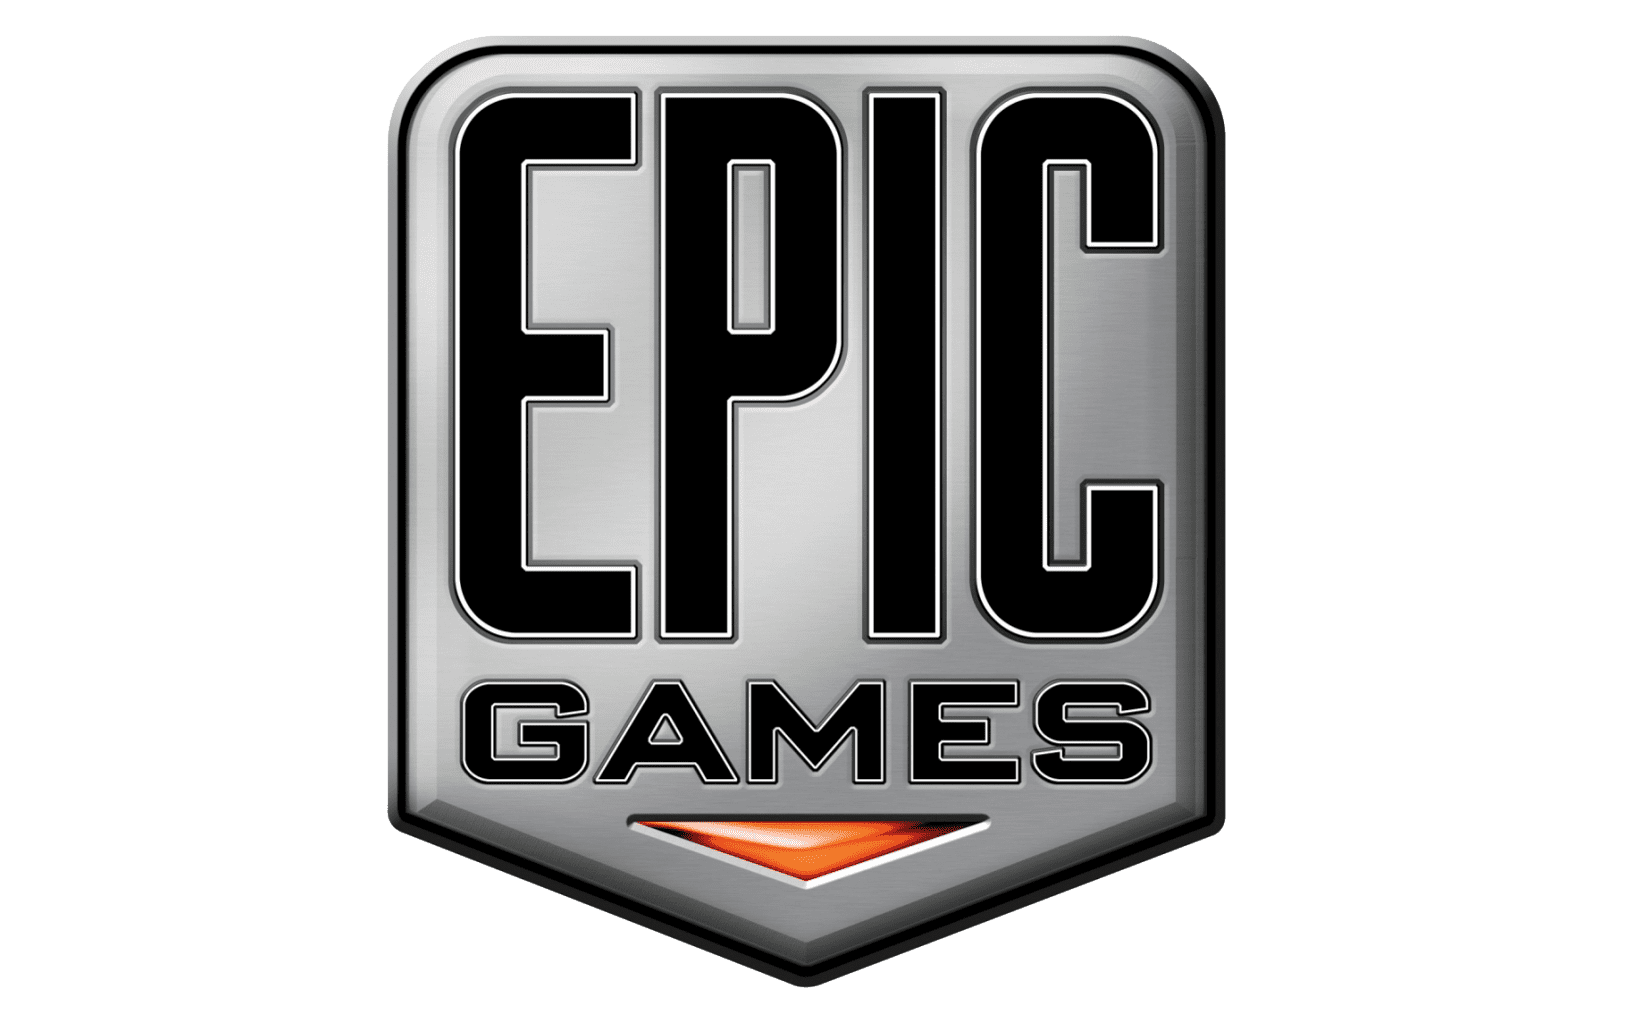 Epic Games Logo PNG Photos